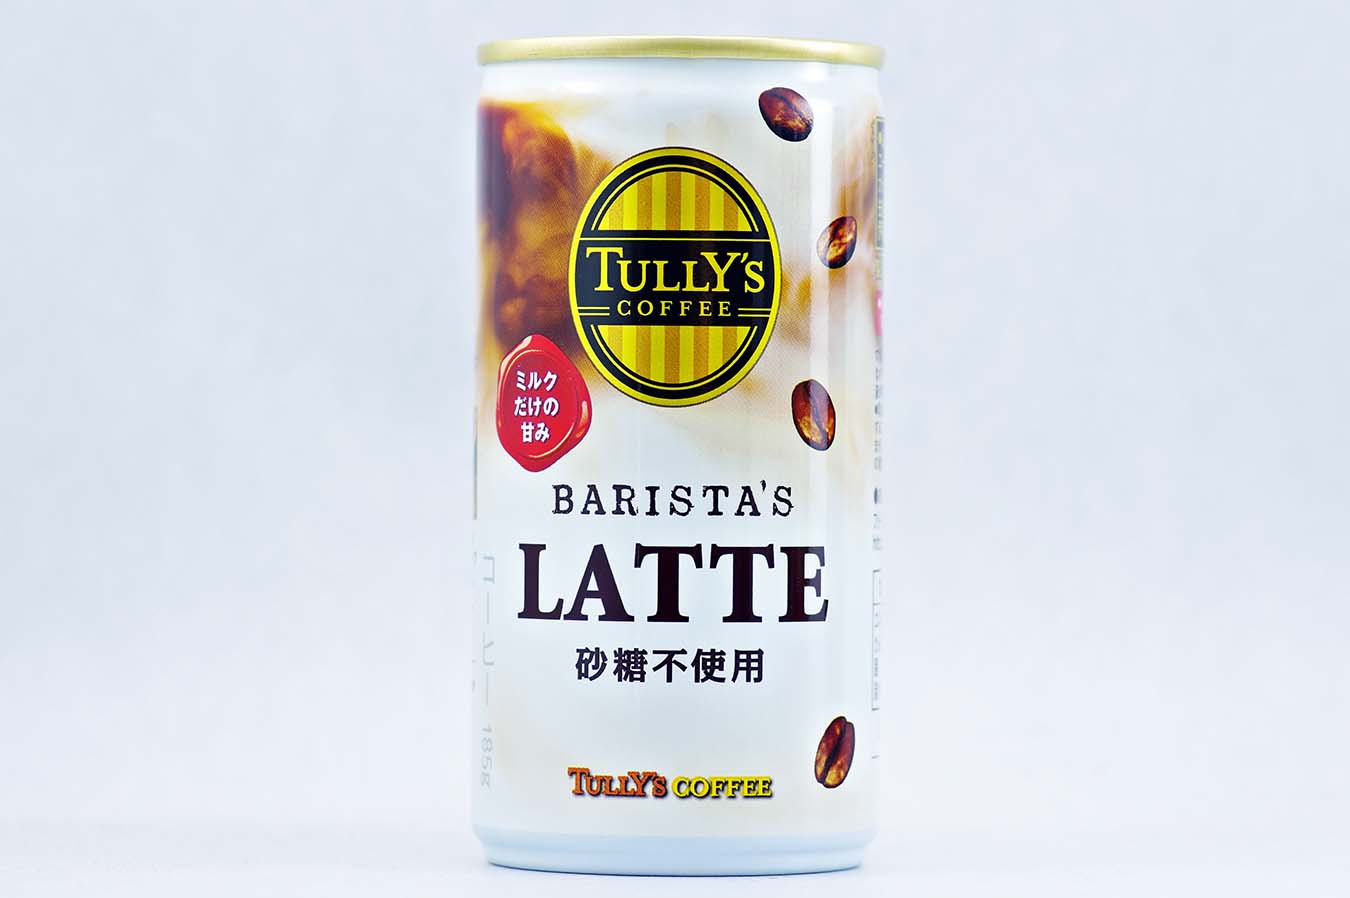 TULLY'S COFFEE BARISTA'S LATTE 2015年10月